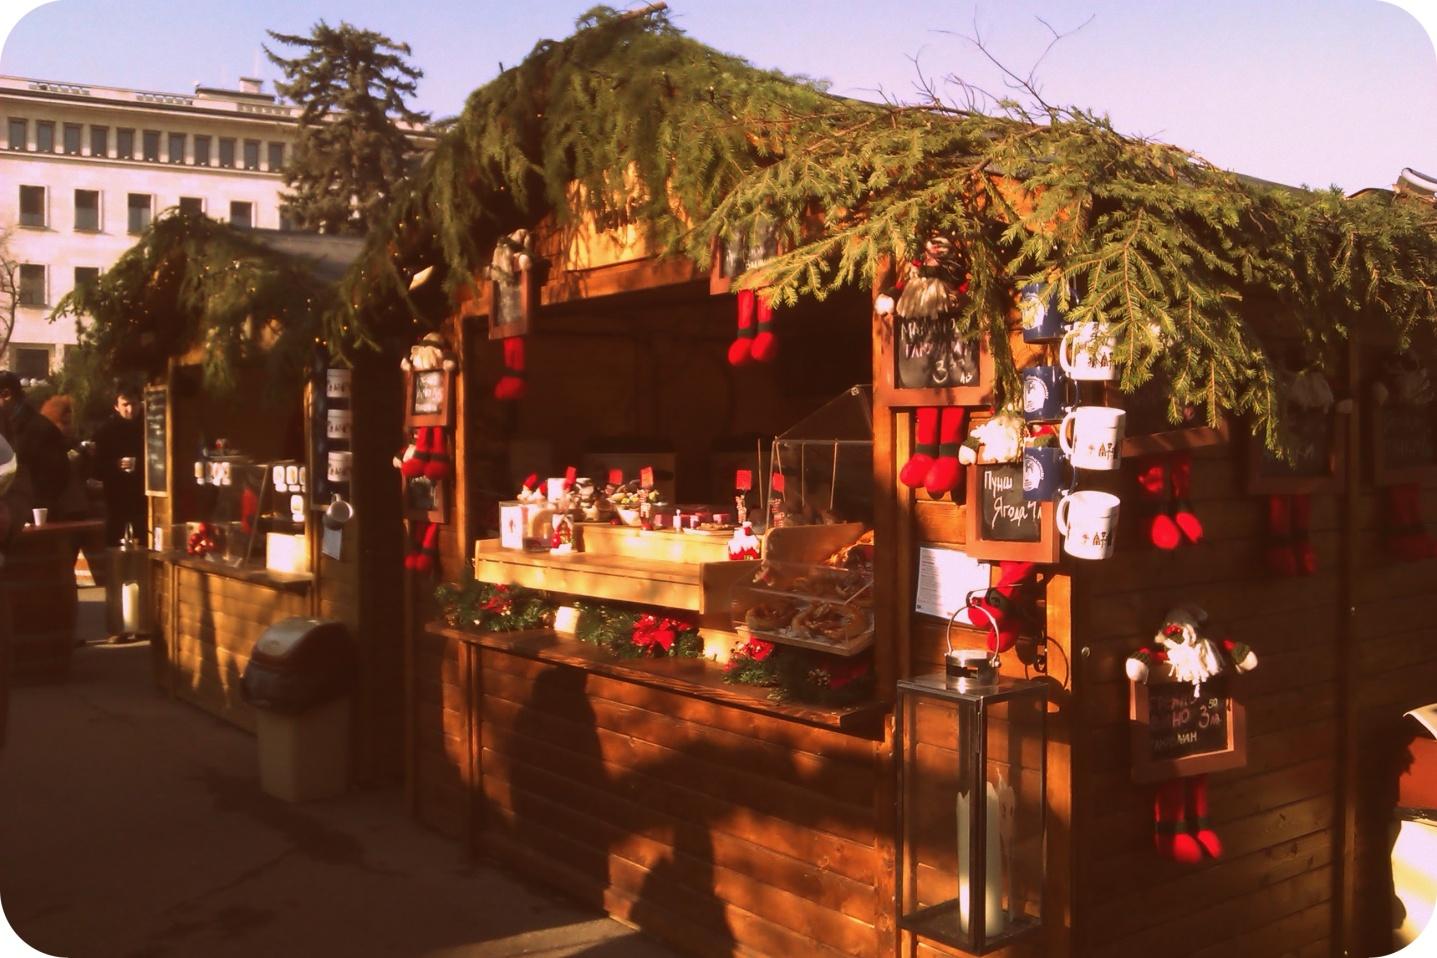 The Weihnachtsmarkt in Sofia / Немският Коледен Базар